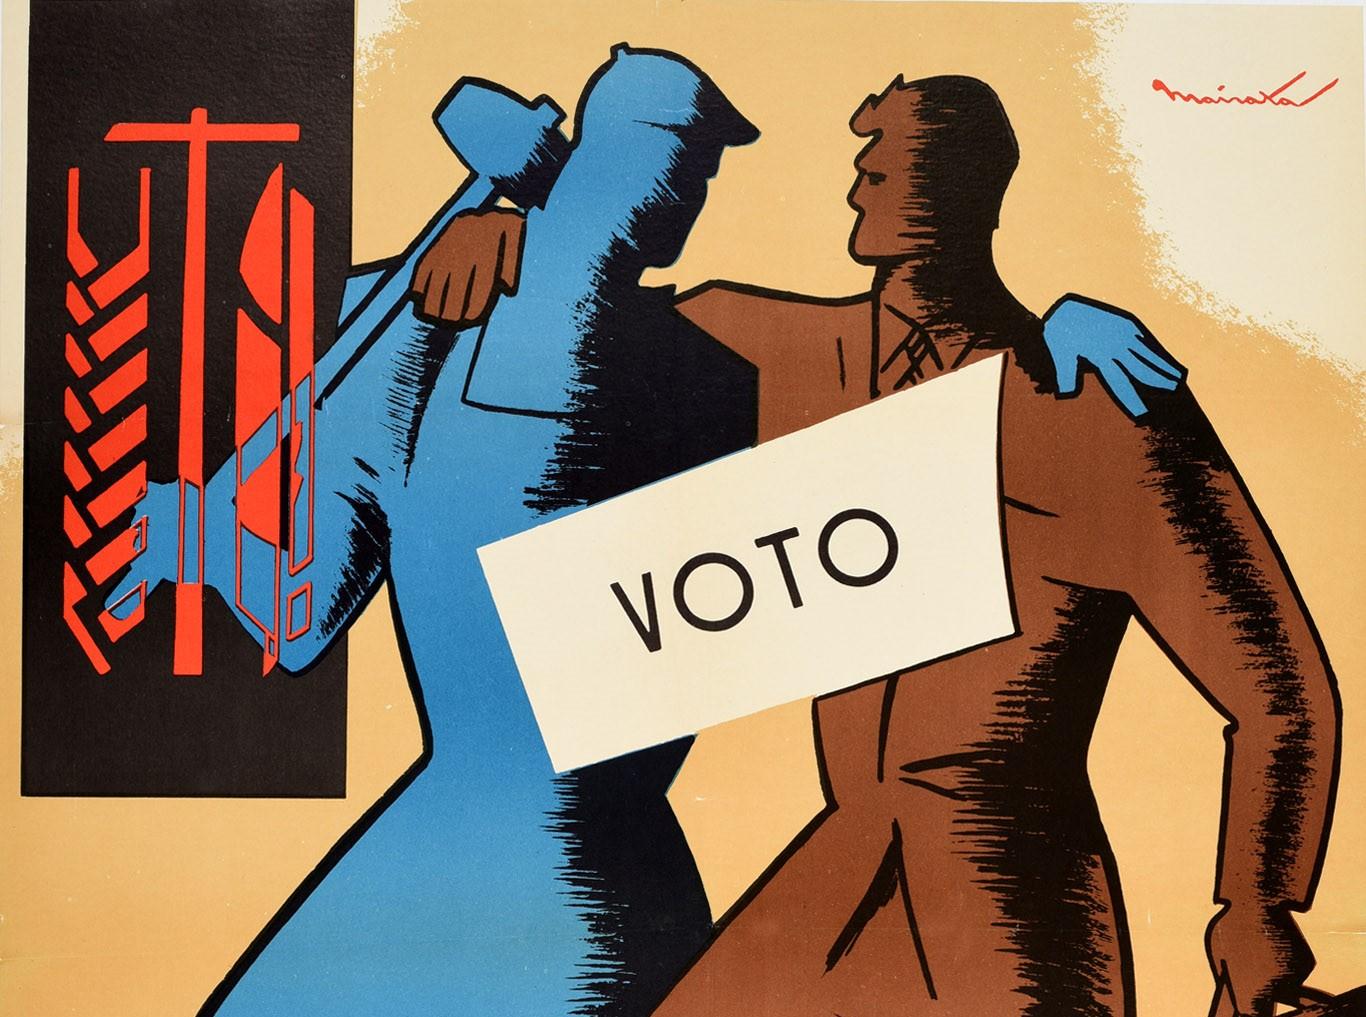 Original Vintage Poster Elecciones Sindicales Voto Spanish Union Elections Vote - Print by Mainata